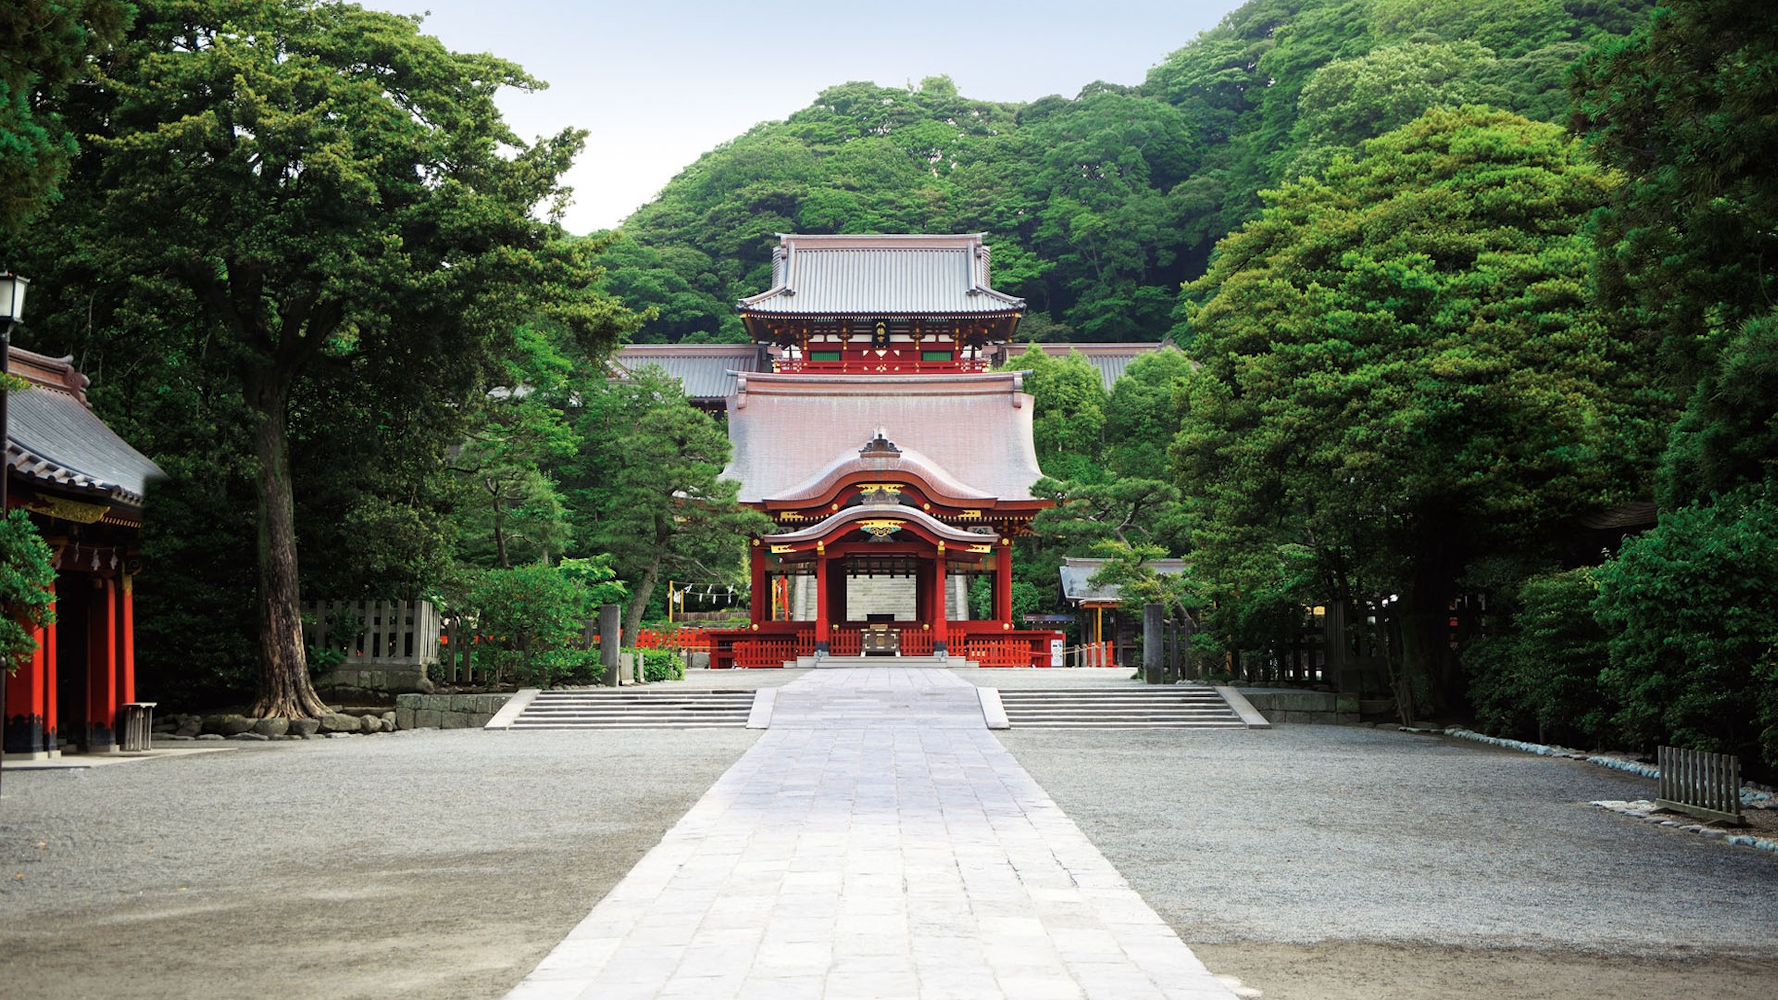 A serene pathway winding through lush trees, guiding visitors to the enchanting Tsurugaoka Hachimangu Shrine in Japan.